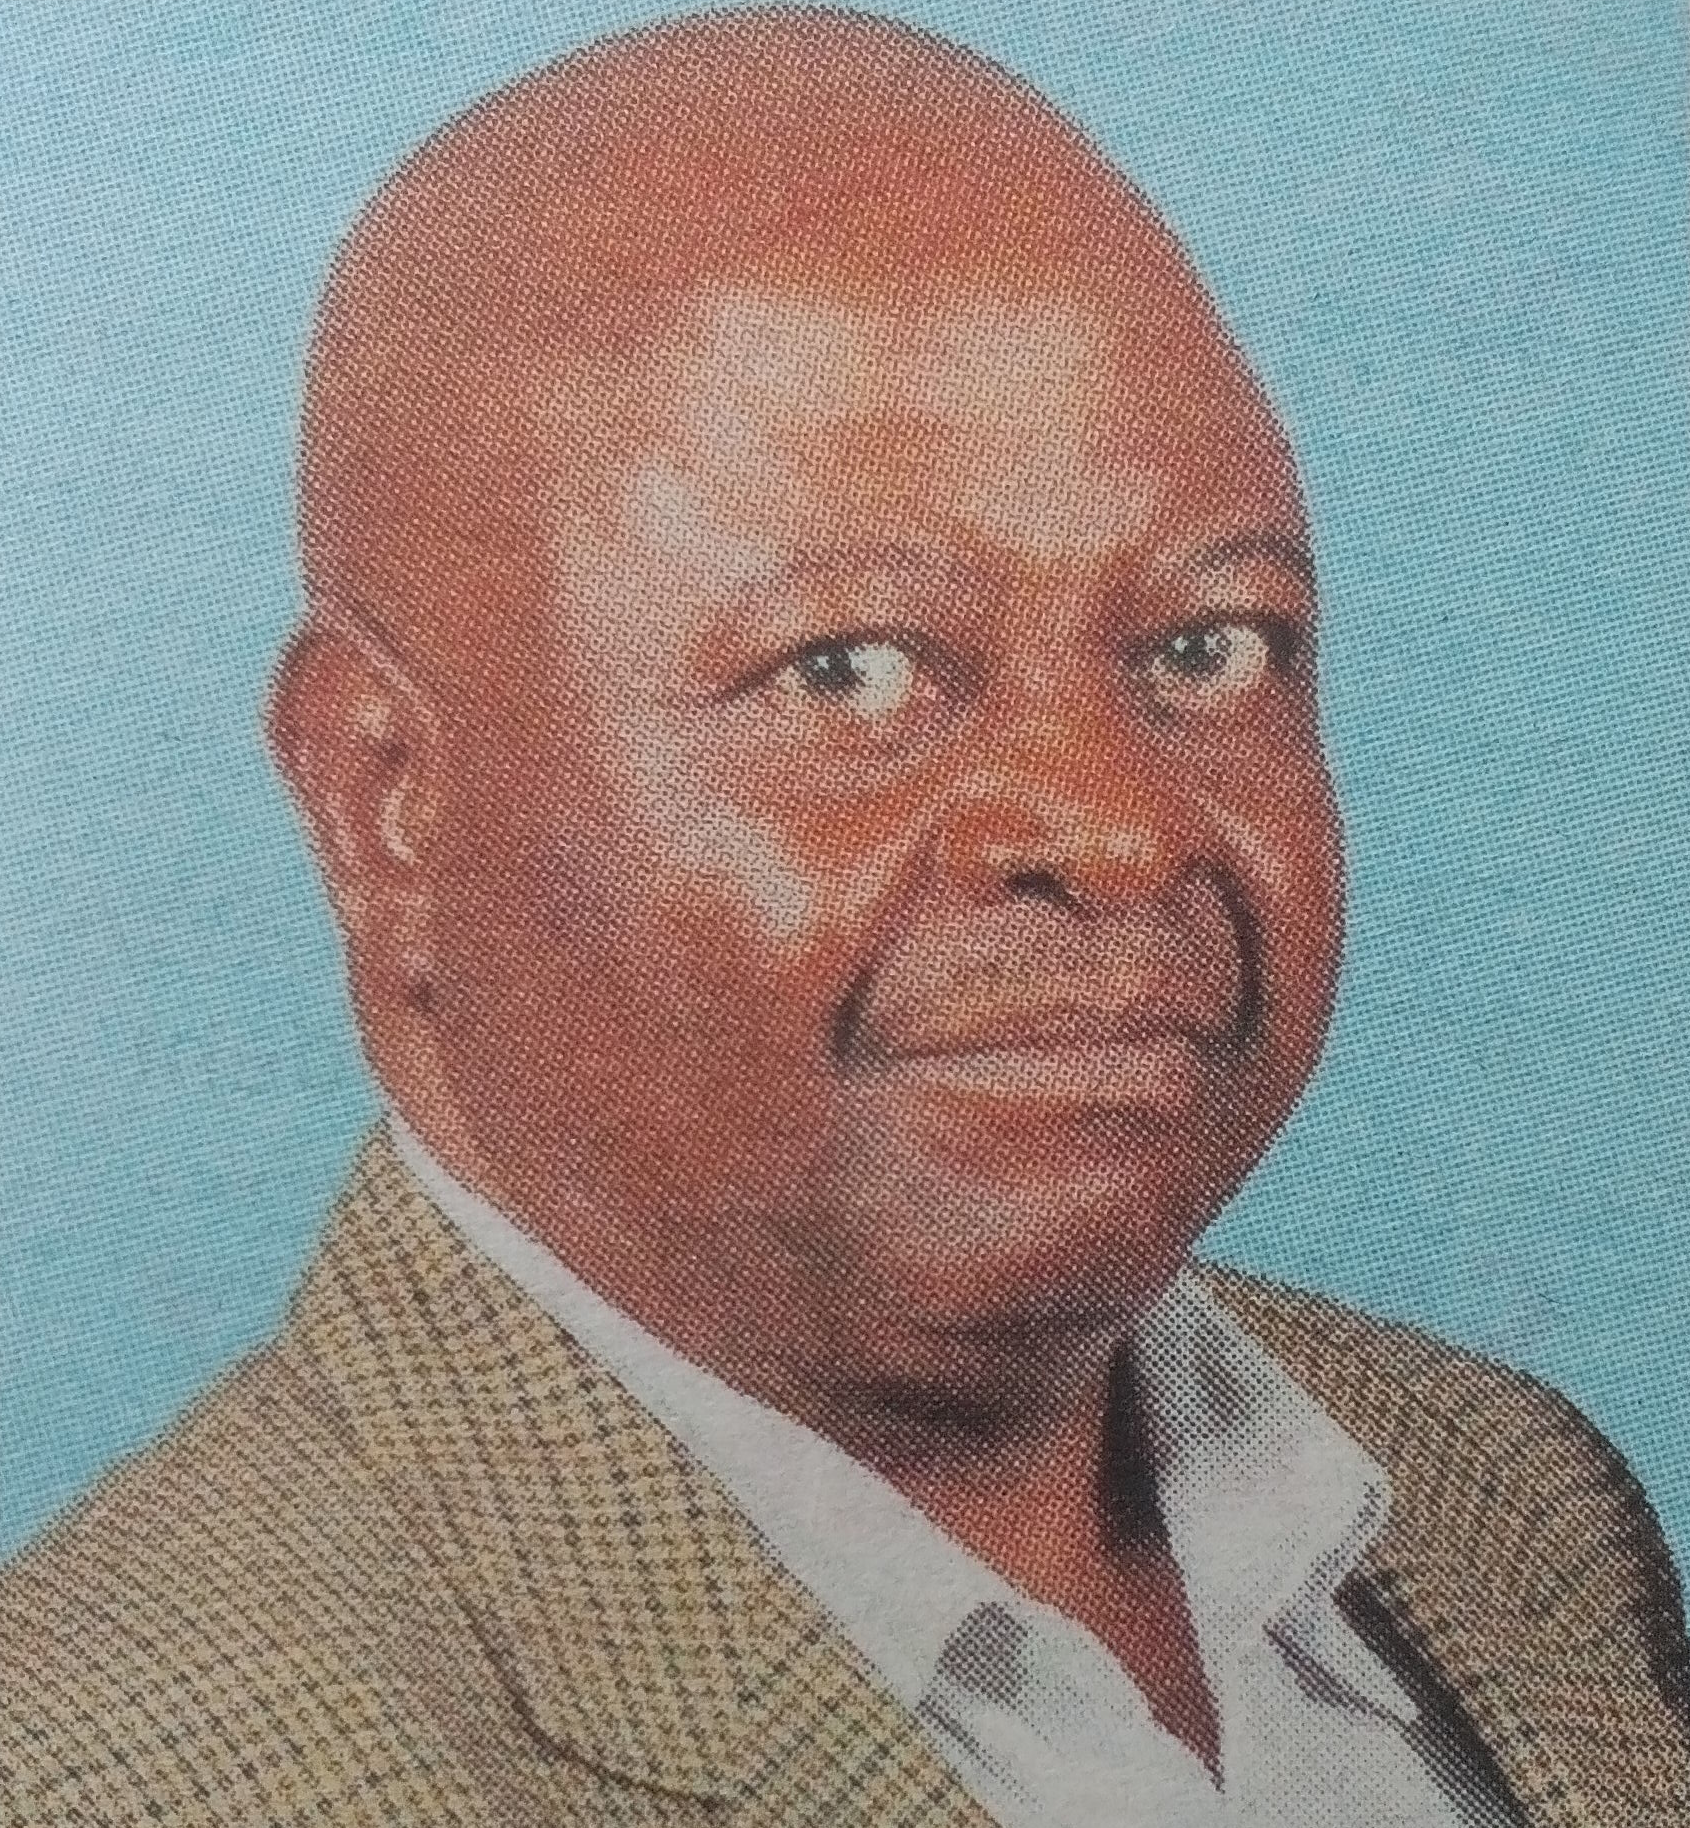 Obituary Image of Simon Nyoro Gitau